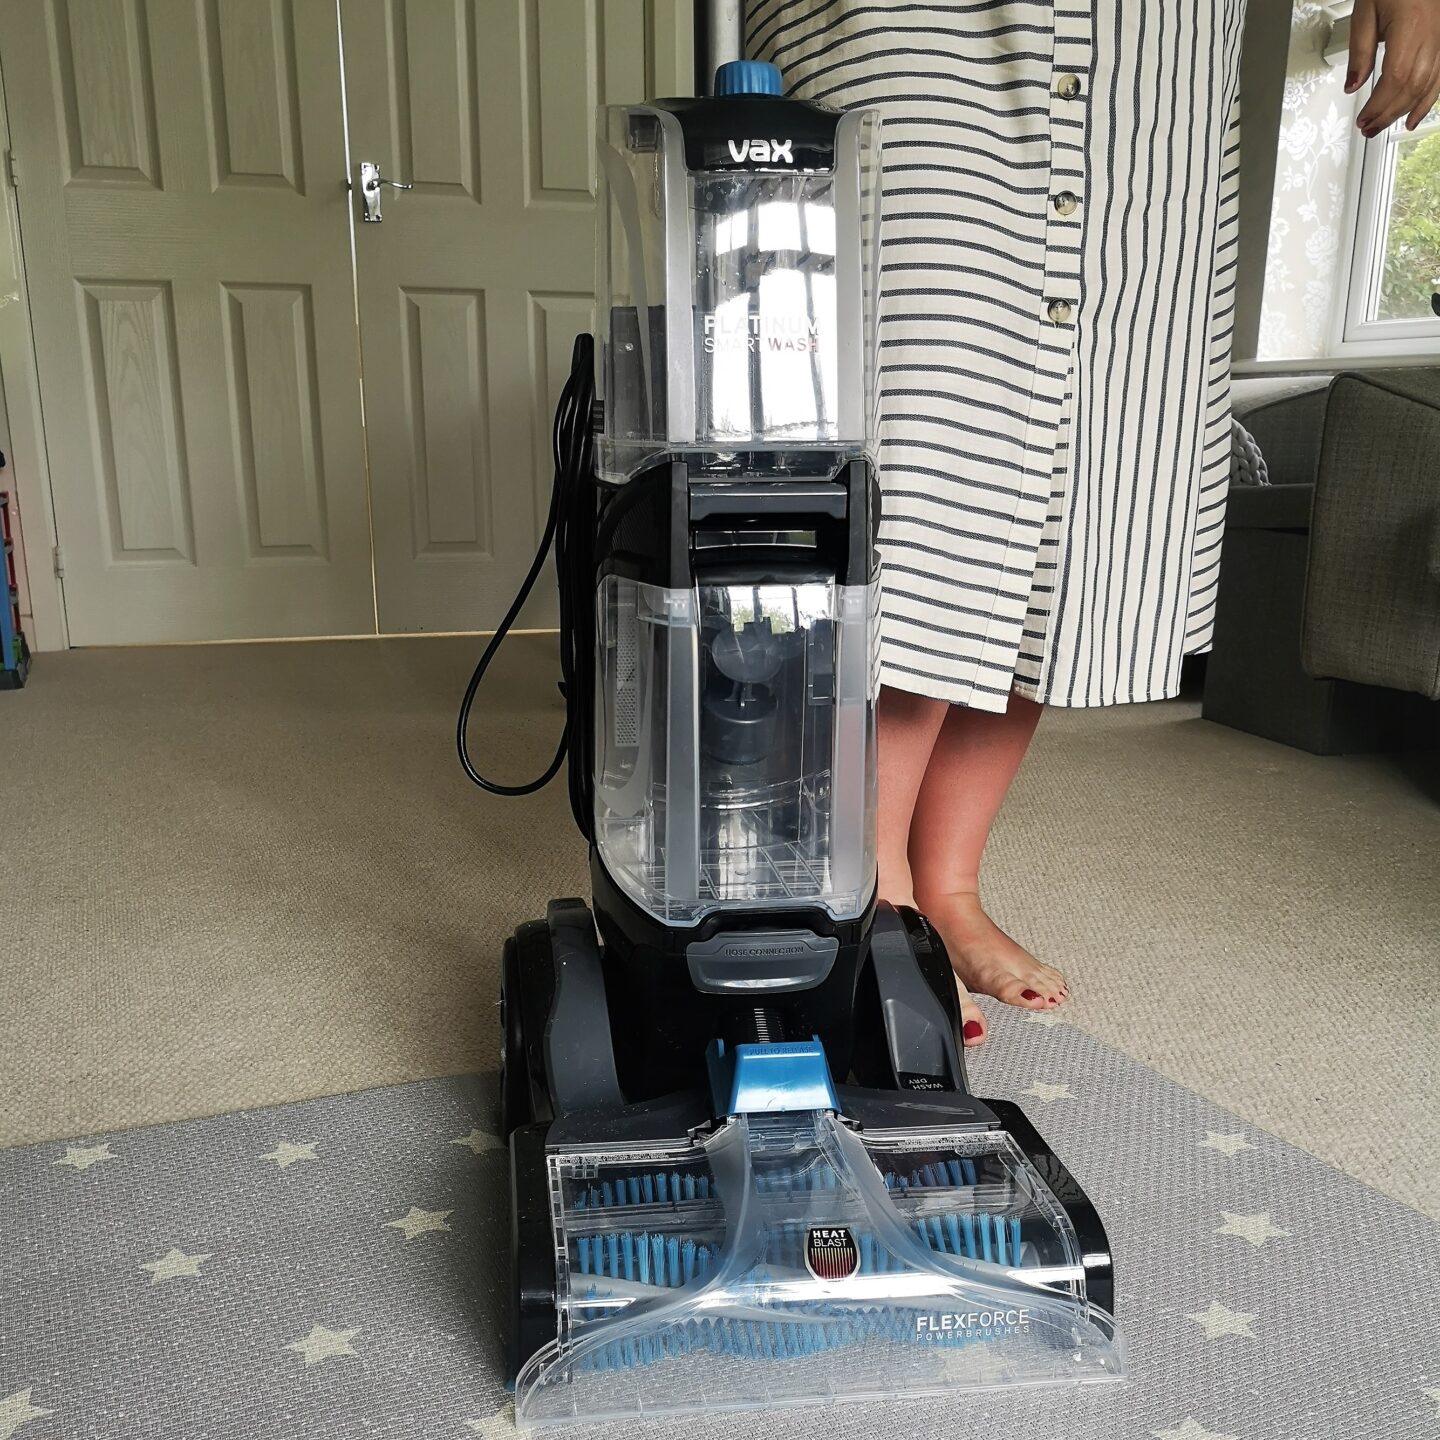 Vax Platinum Smartwash Carpet Cleaner Review The Frenchie Mummy